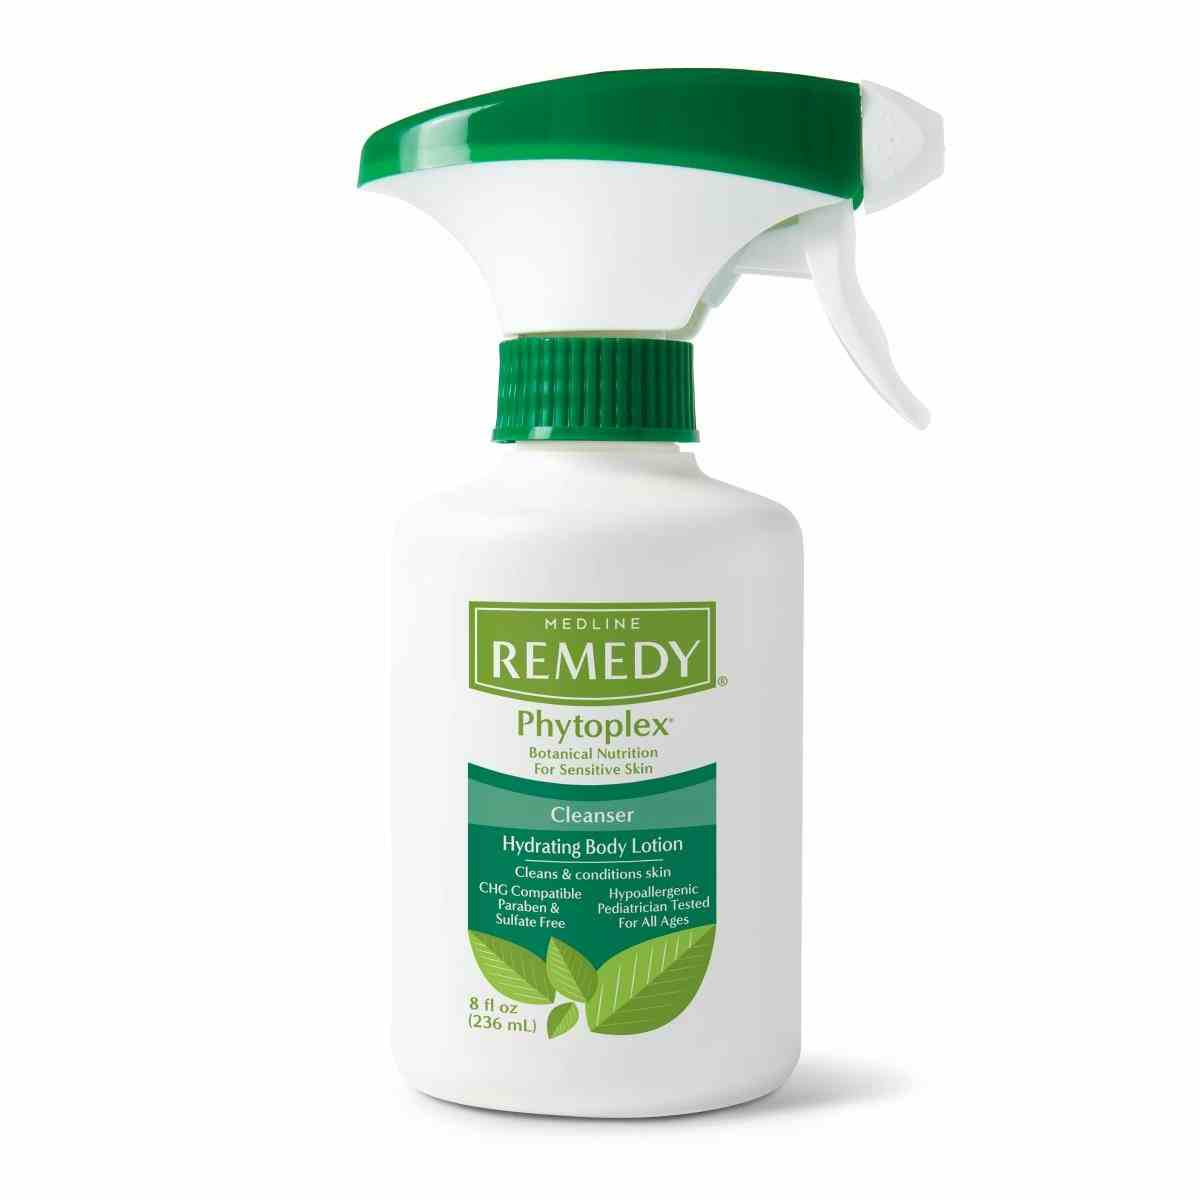 Medline Remedy Phytoplex Cleansing Body Lotion, Trigger Bottle, 8 oz., MSC092308H, 1 Each